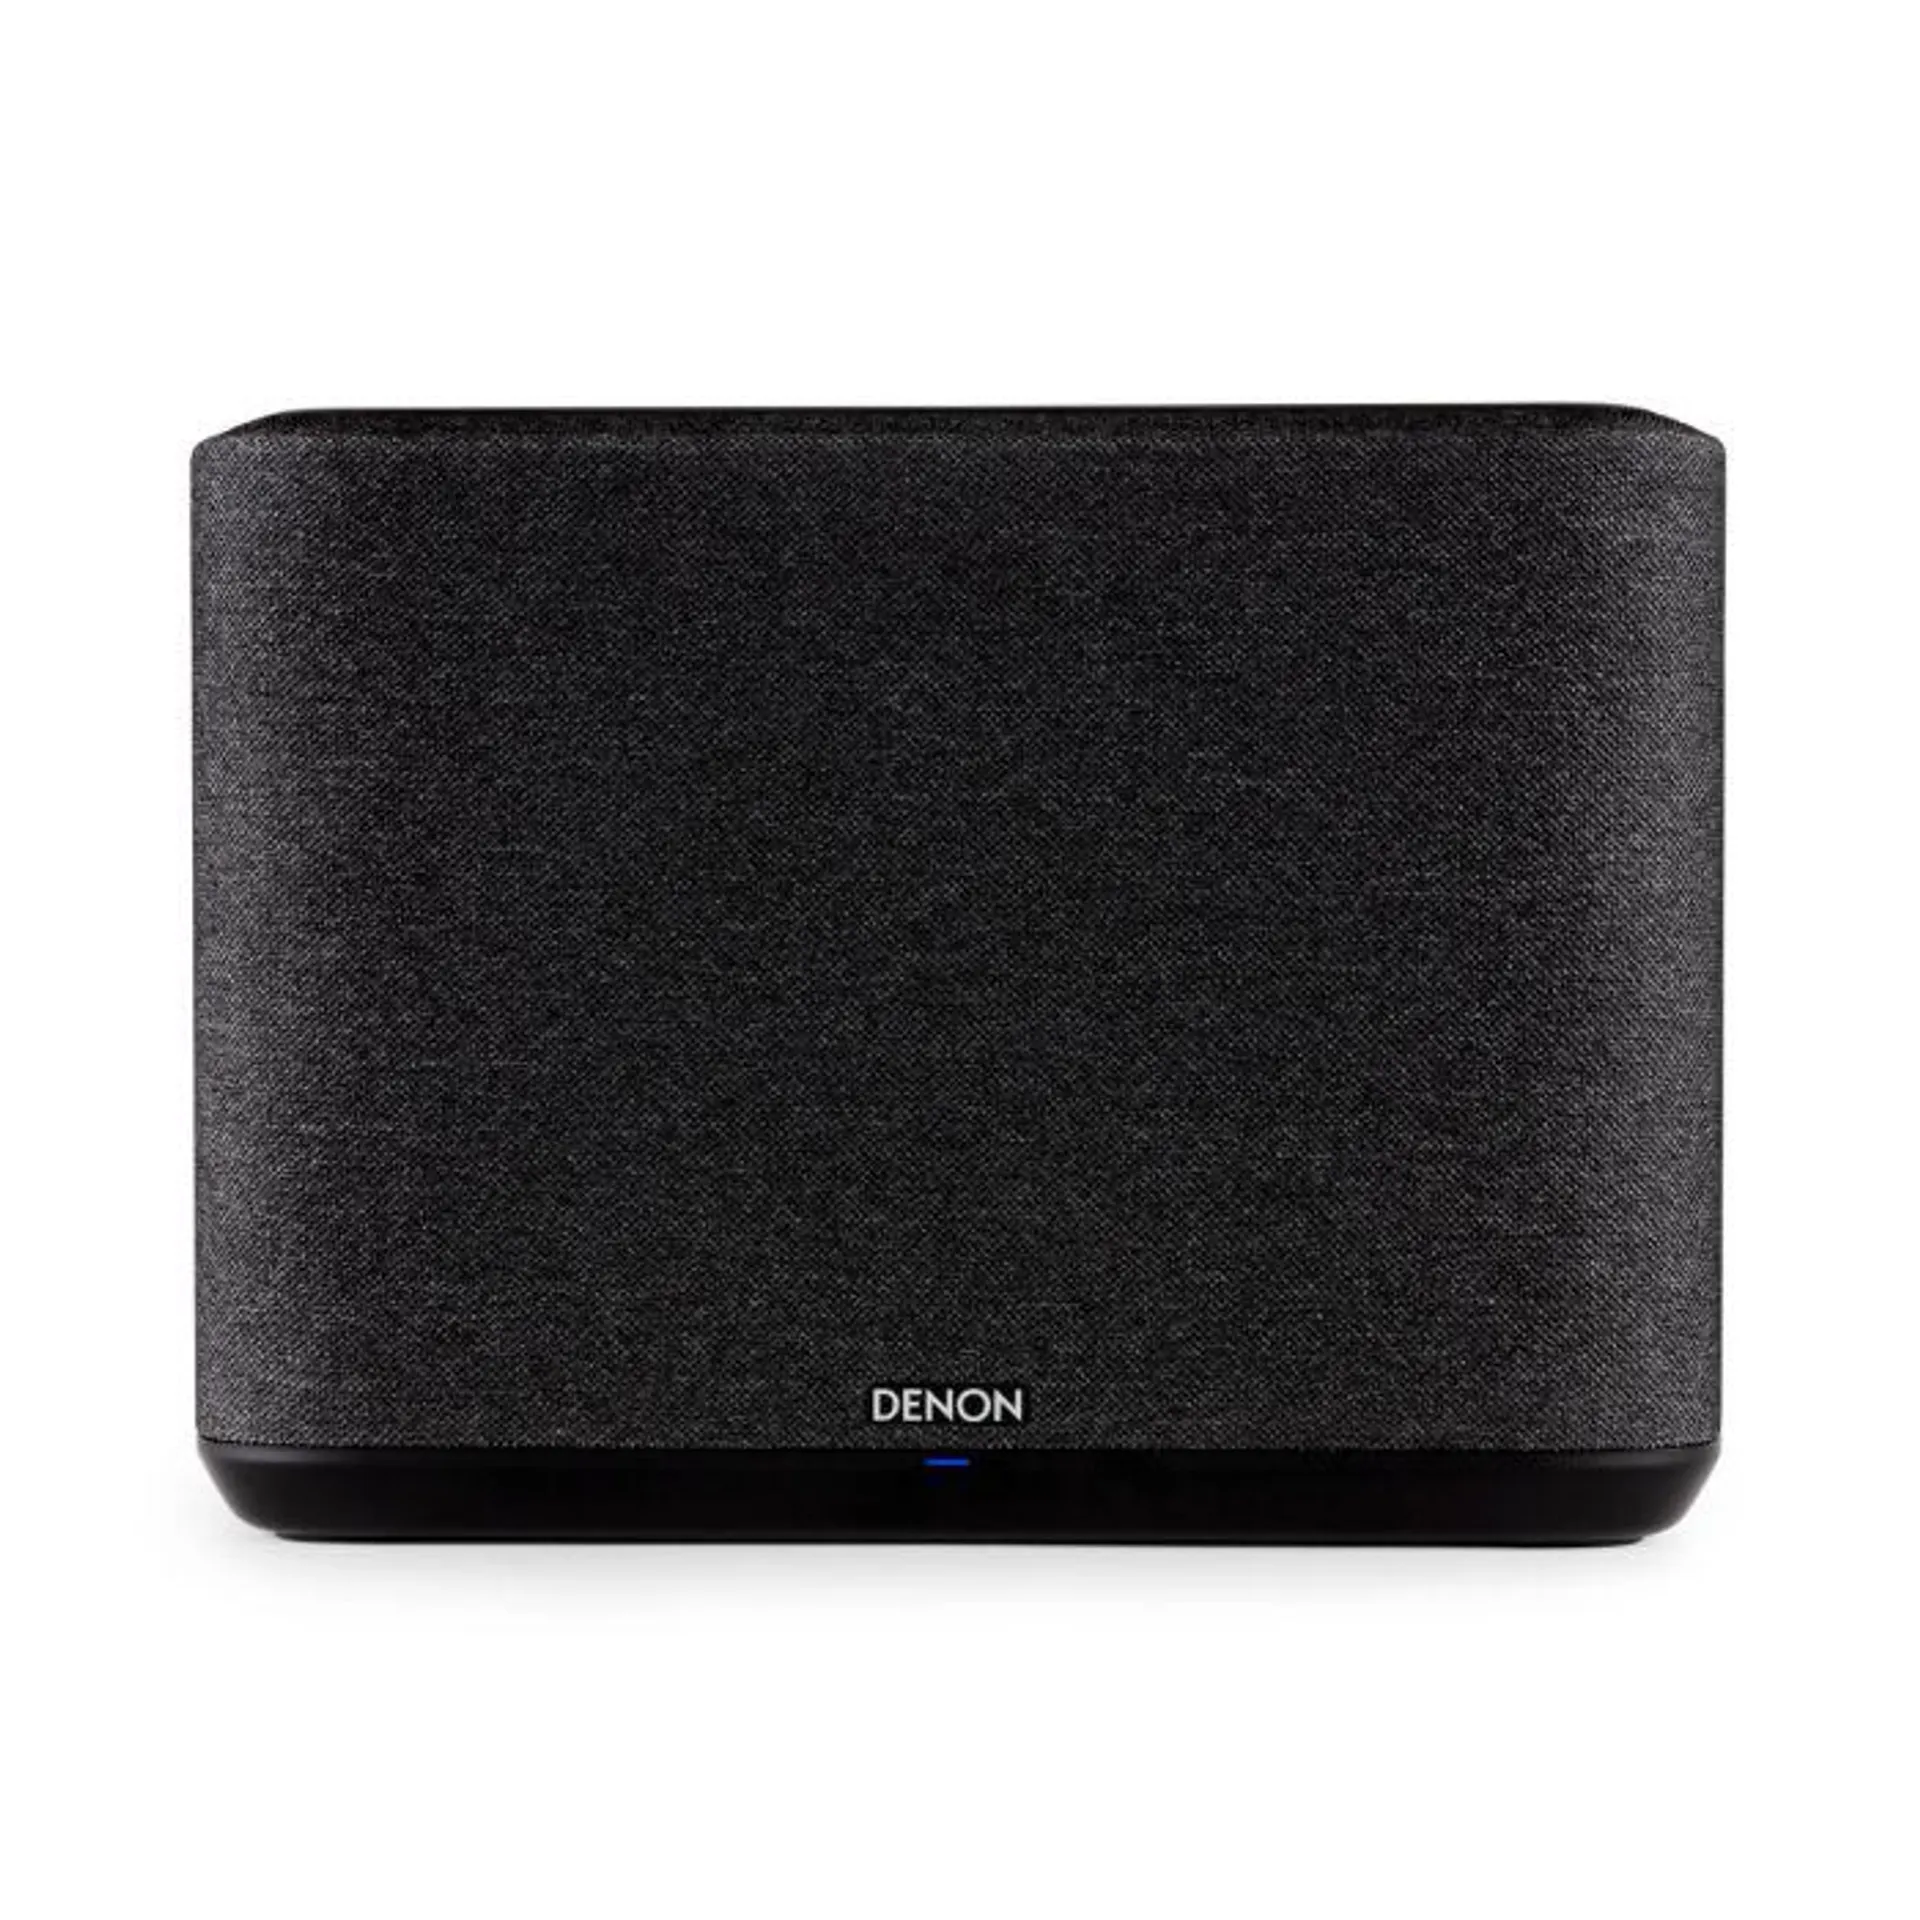 Denon Home 250 Wireless Smart Speaker - Black